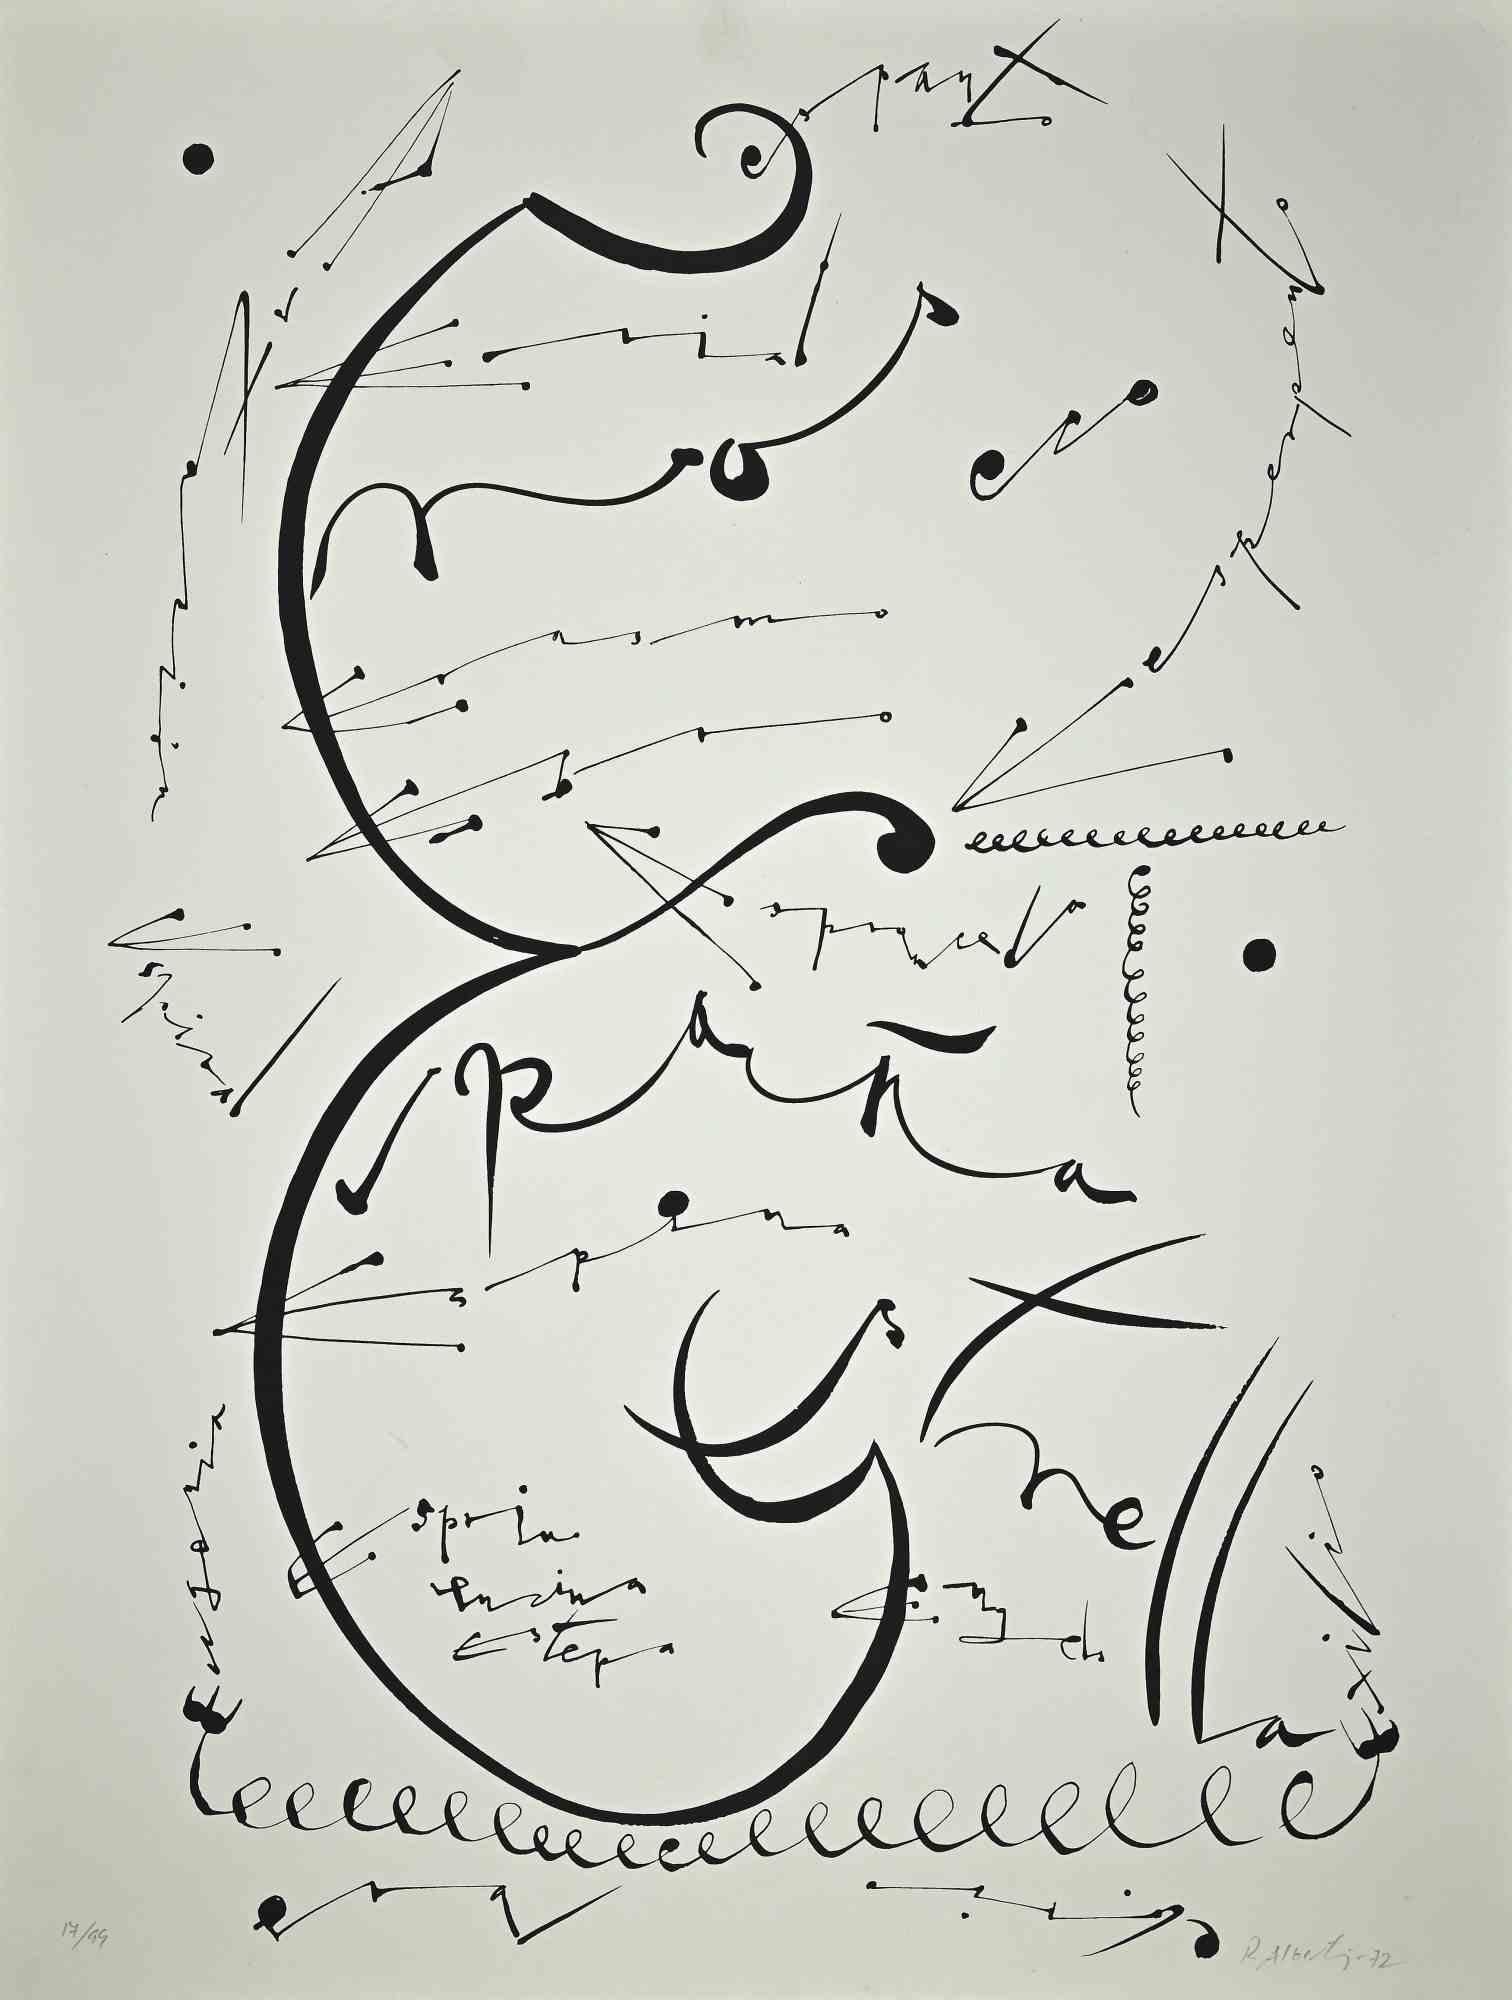 Rafael Alberti Abstract Print - Letter E -  Lithograph by Raphael Alberti - 1972